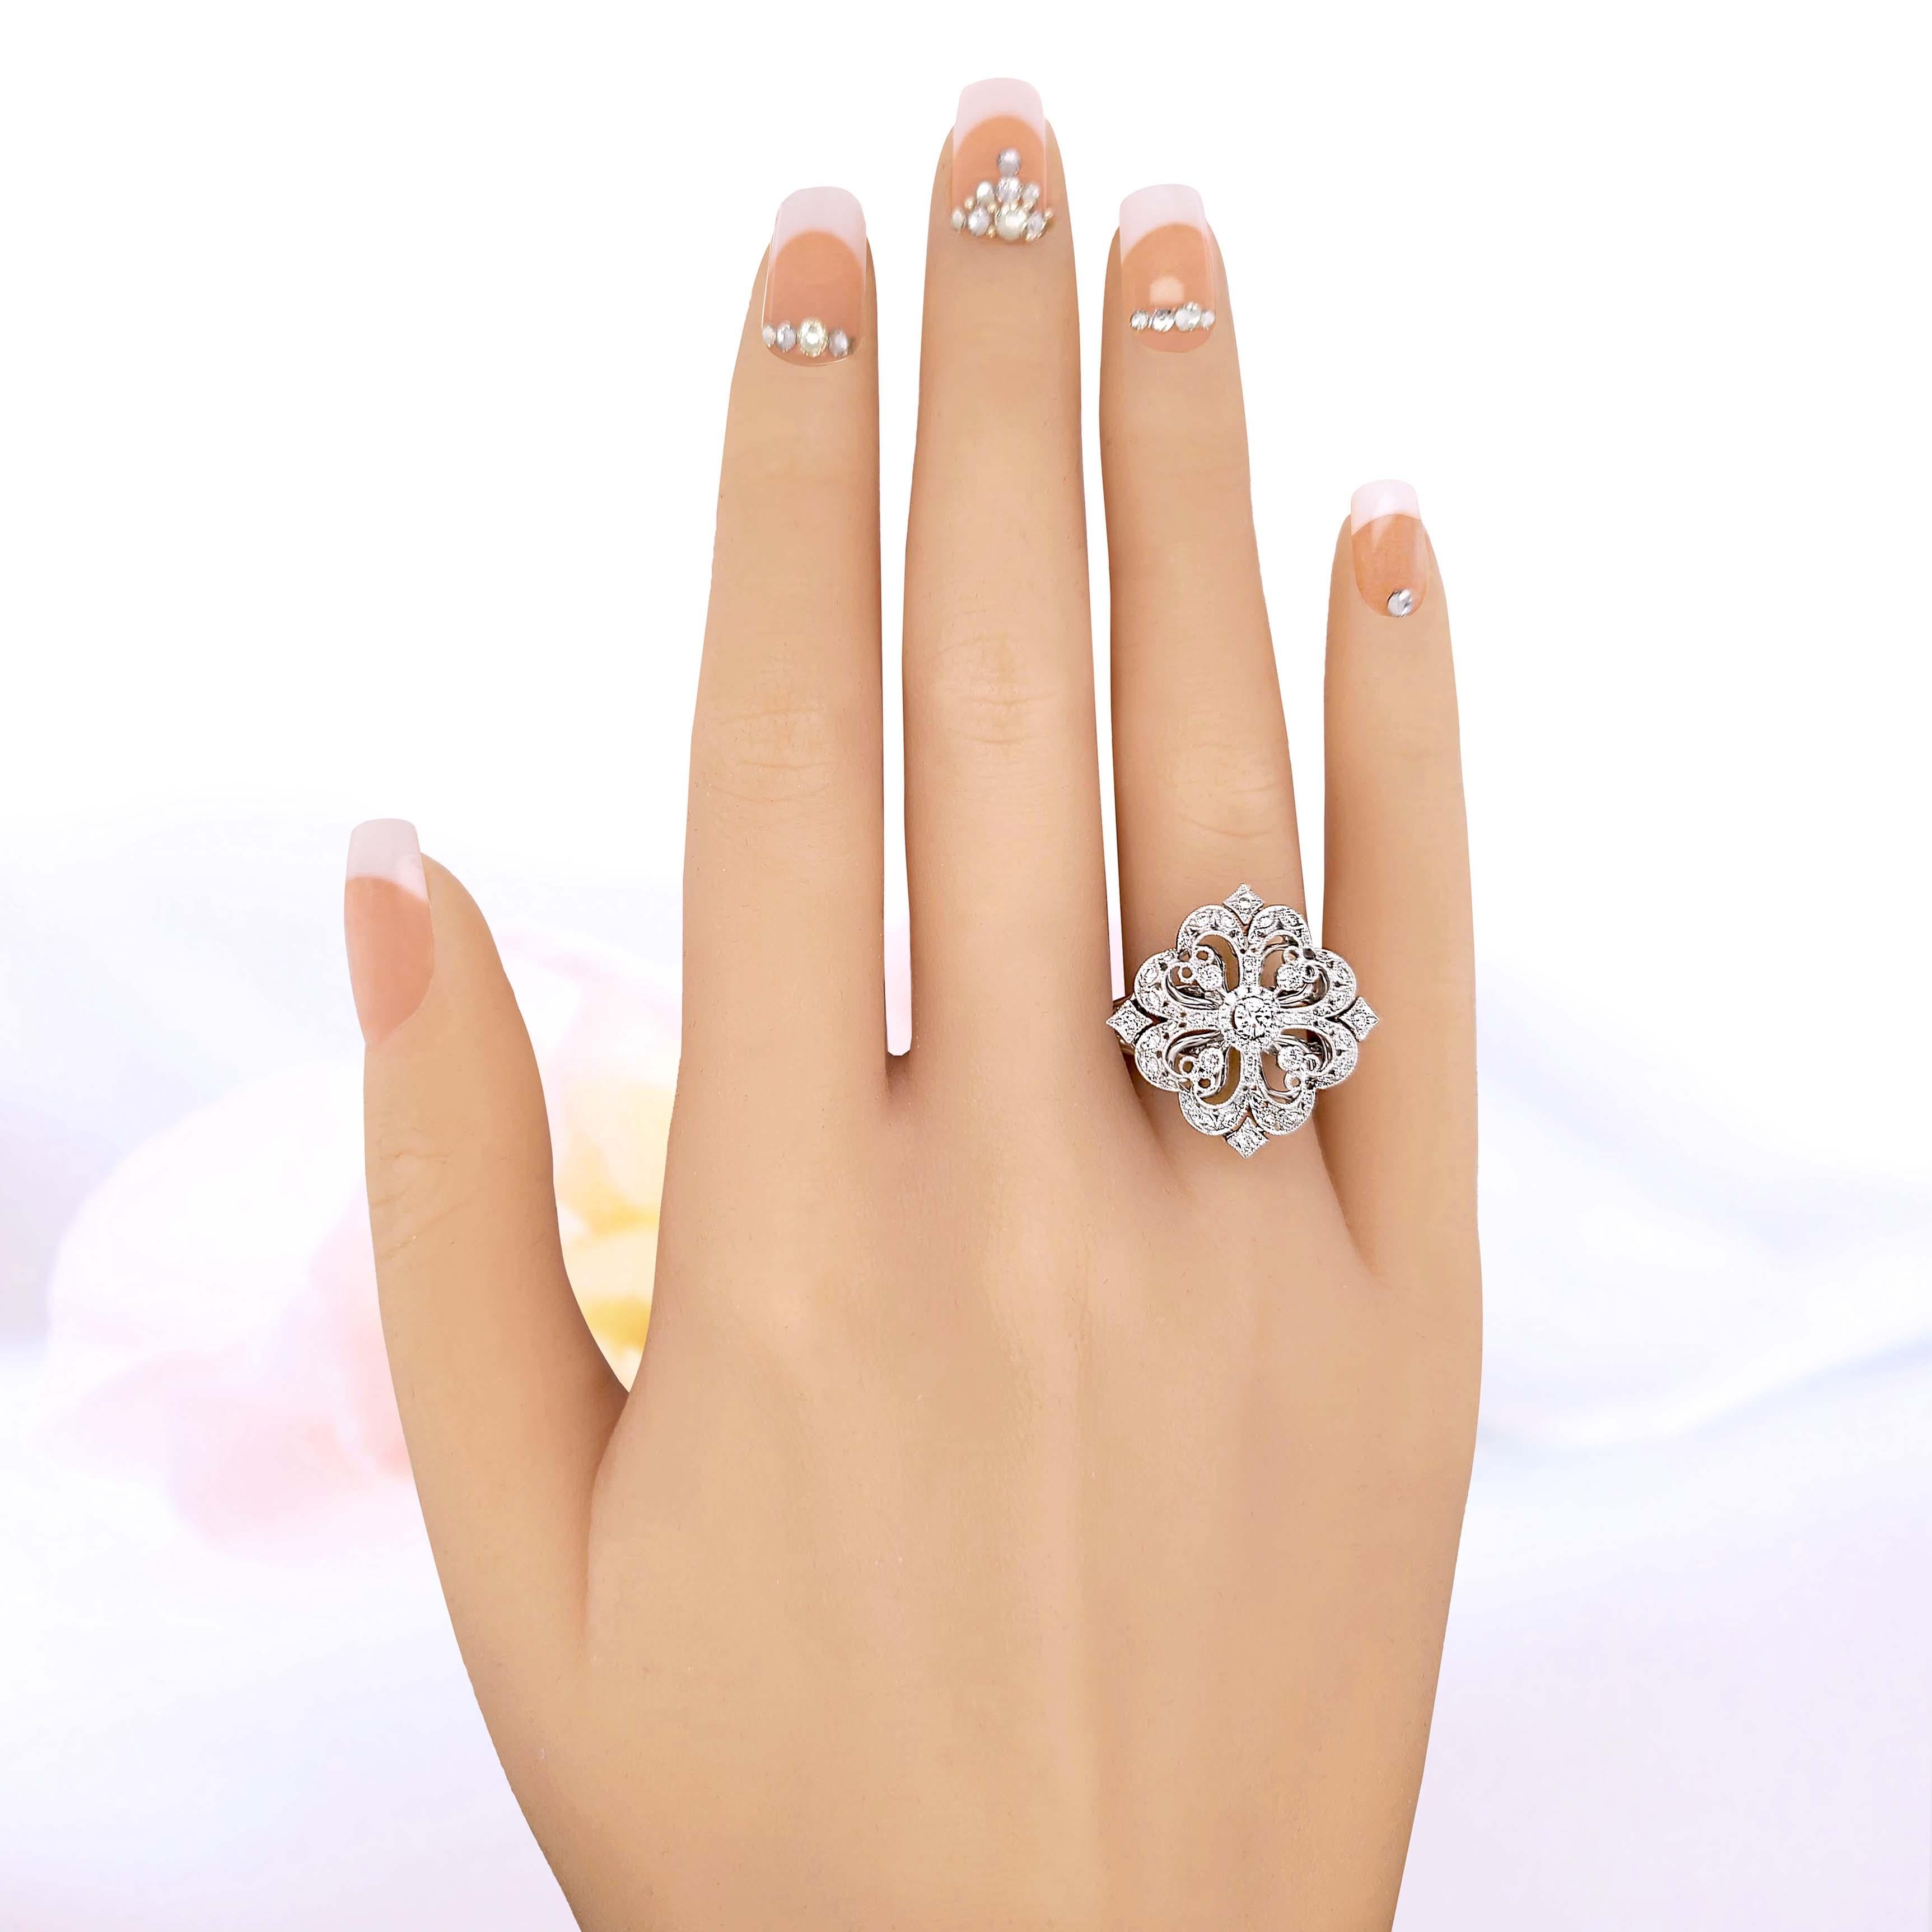 Italian Designer 18 Karat White Gold Flower Motif Diamond Ring In New Condition For Sale In Los Angeles, CA